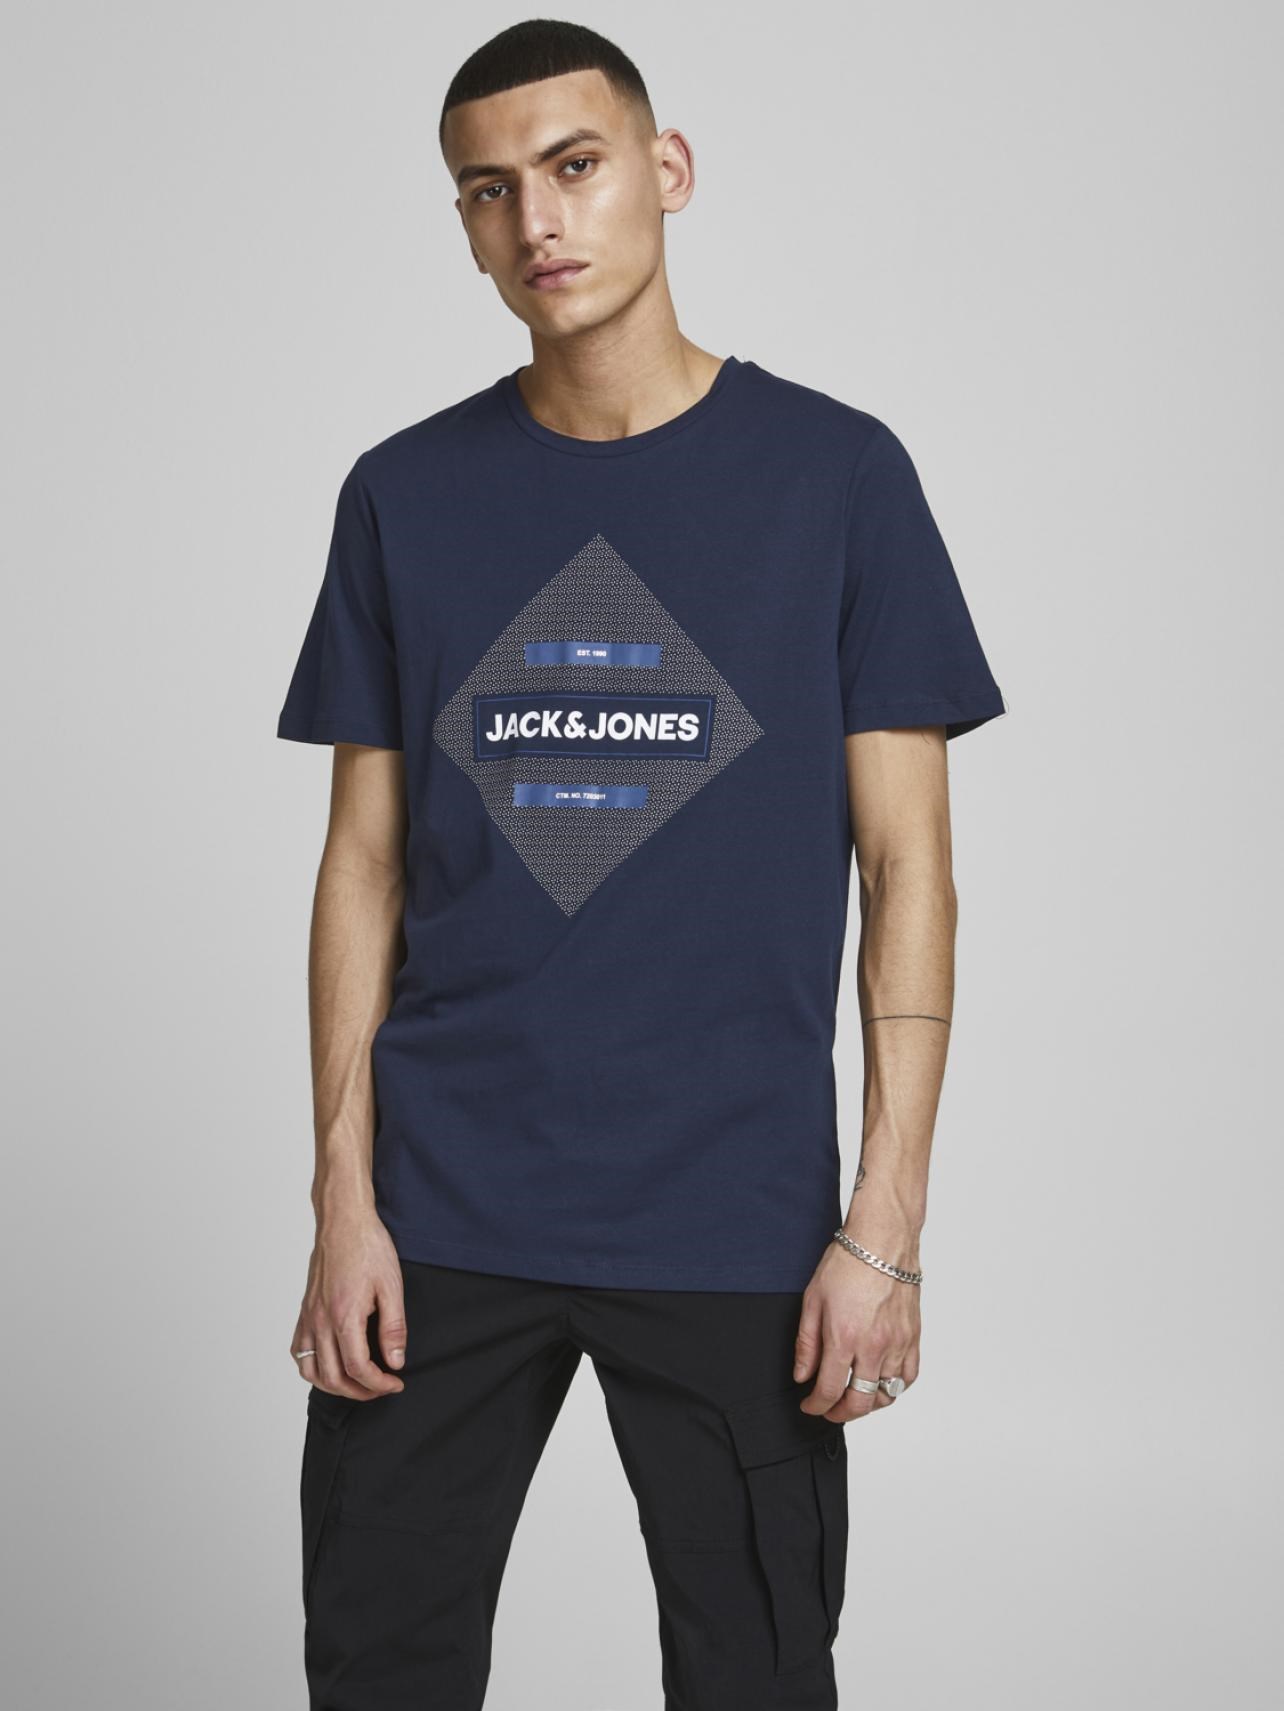 Jack Jones Erkek T-Shirt 12188039 Navy Blazer